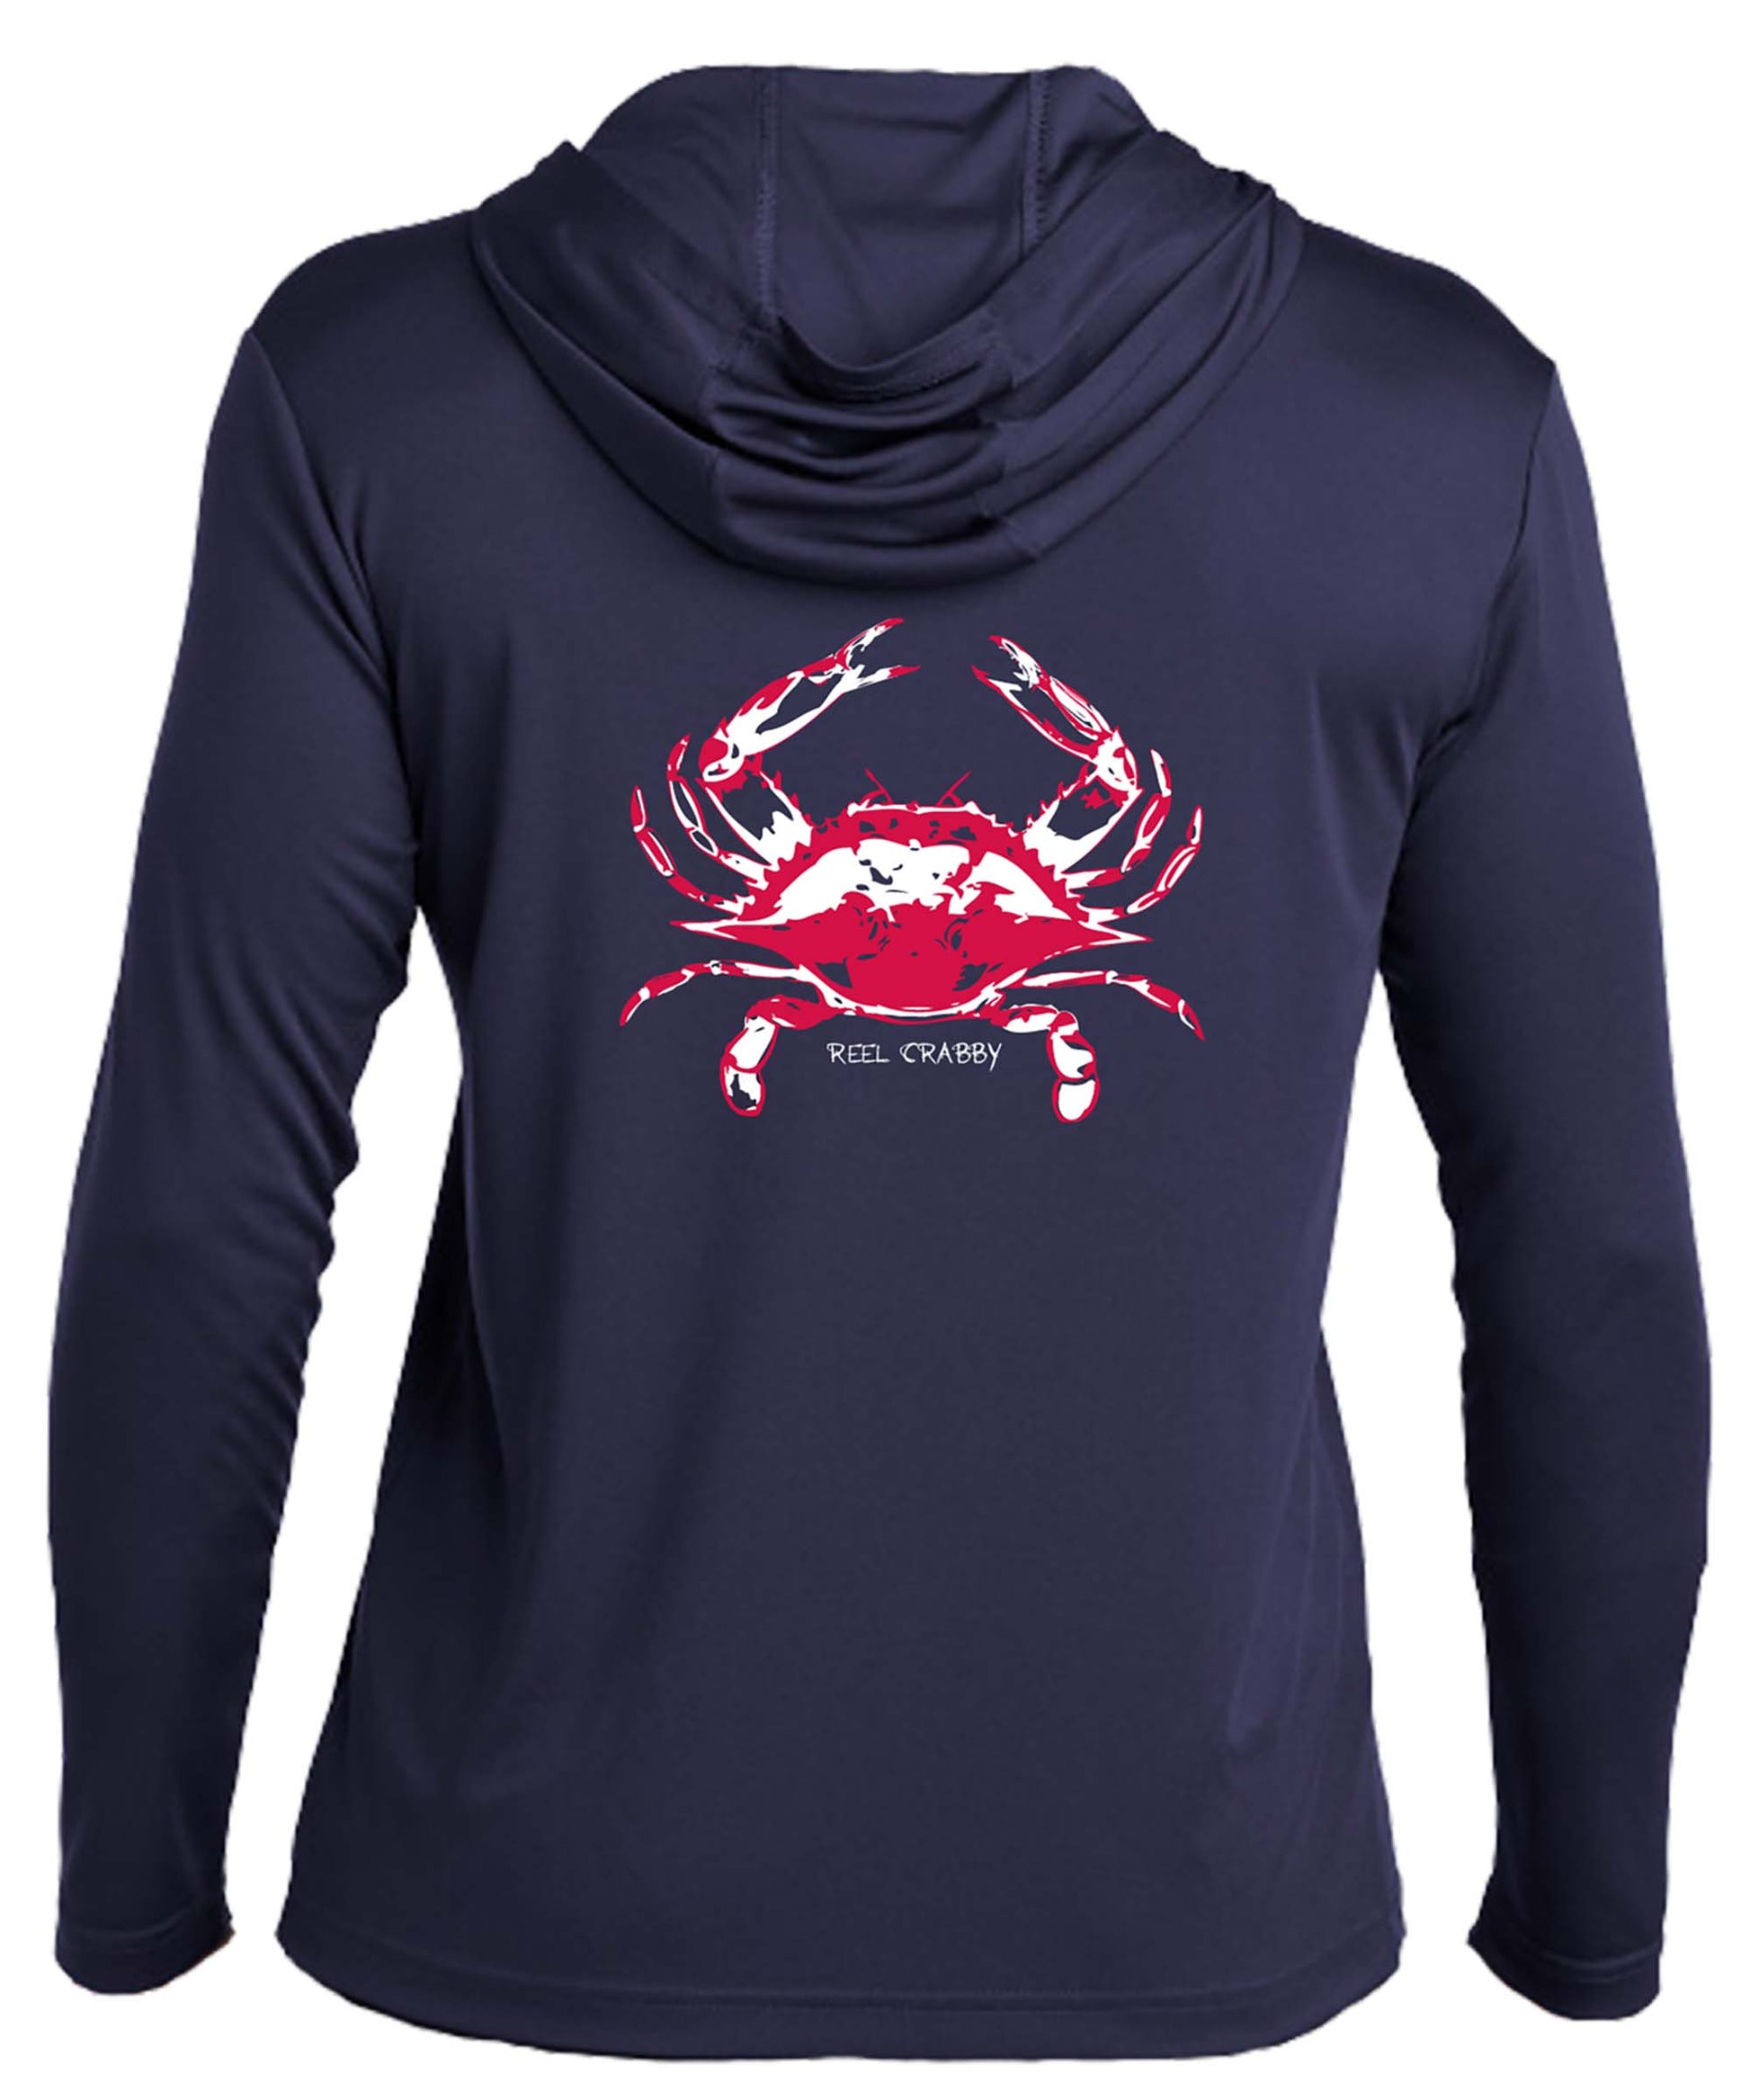 Blue Crab -Reel Crabby Performance Hoodie Dry-fit Long Sleeve Navy